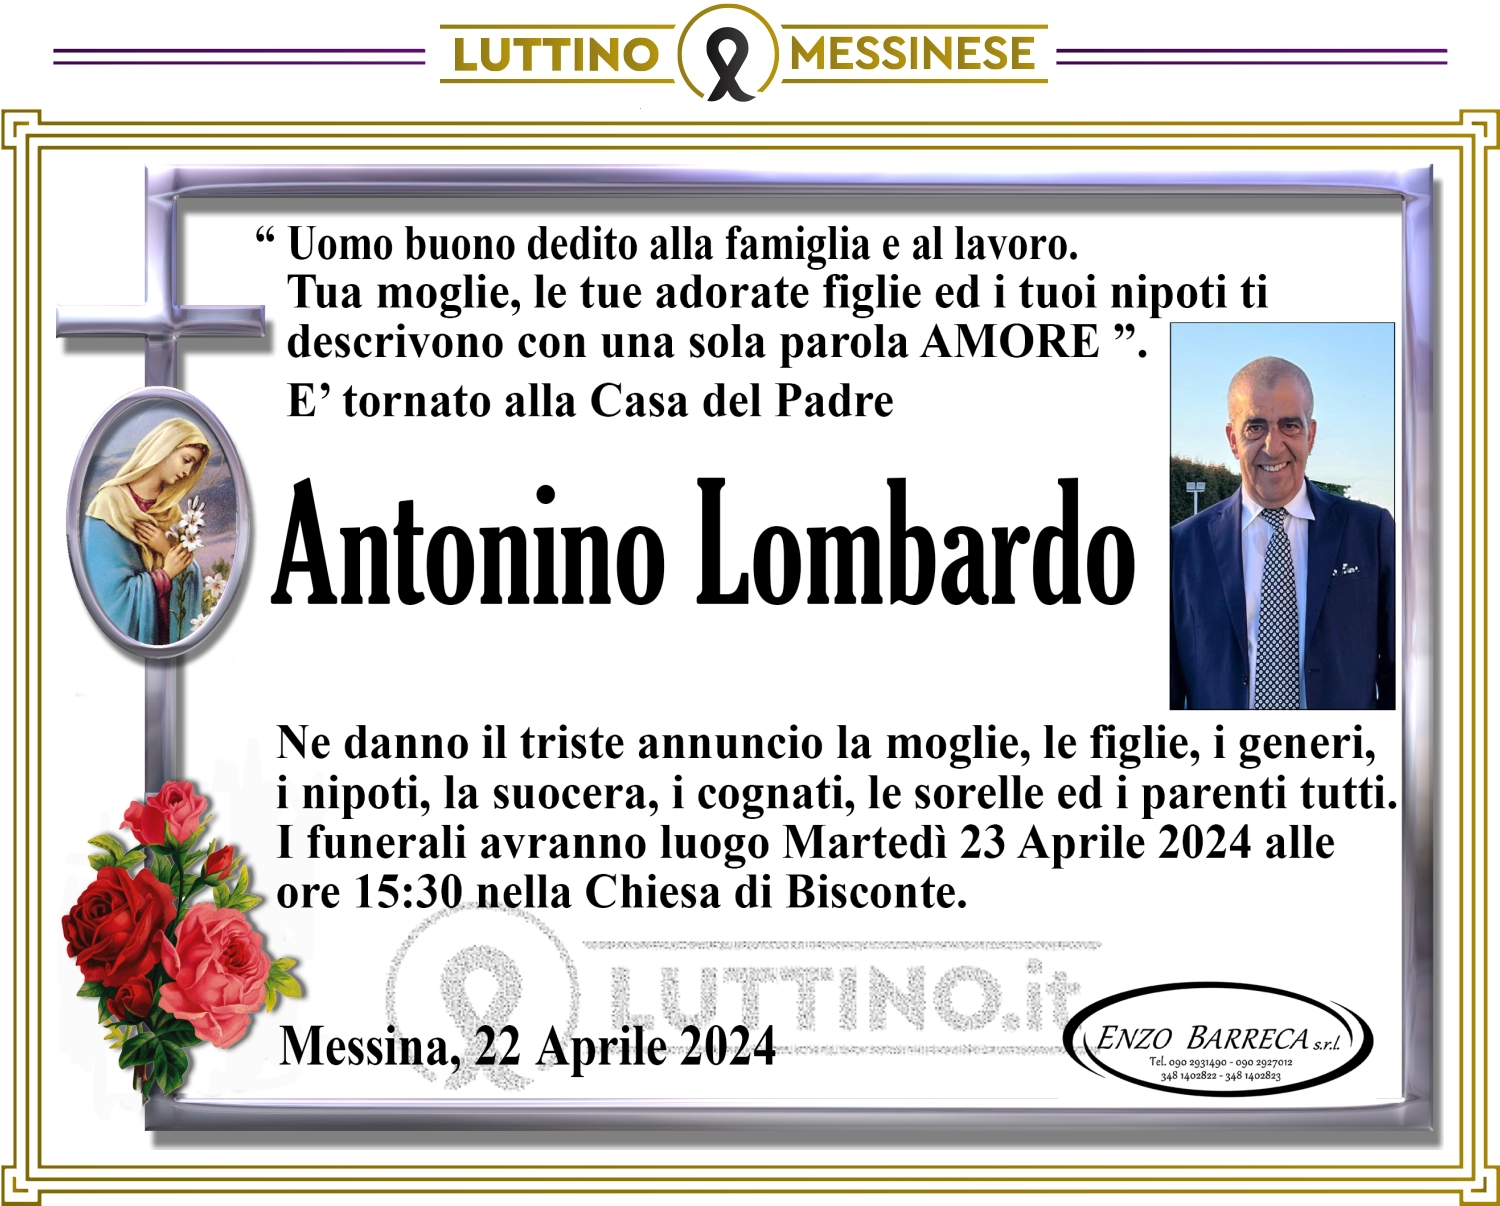 Antonino Lombardo